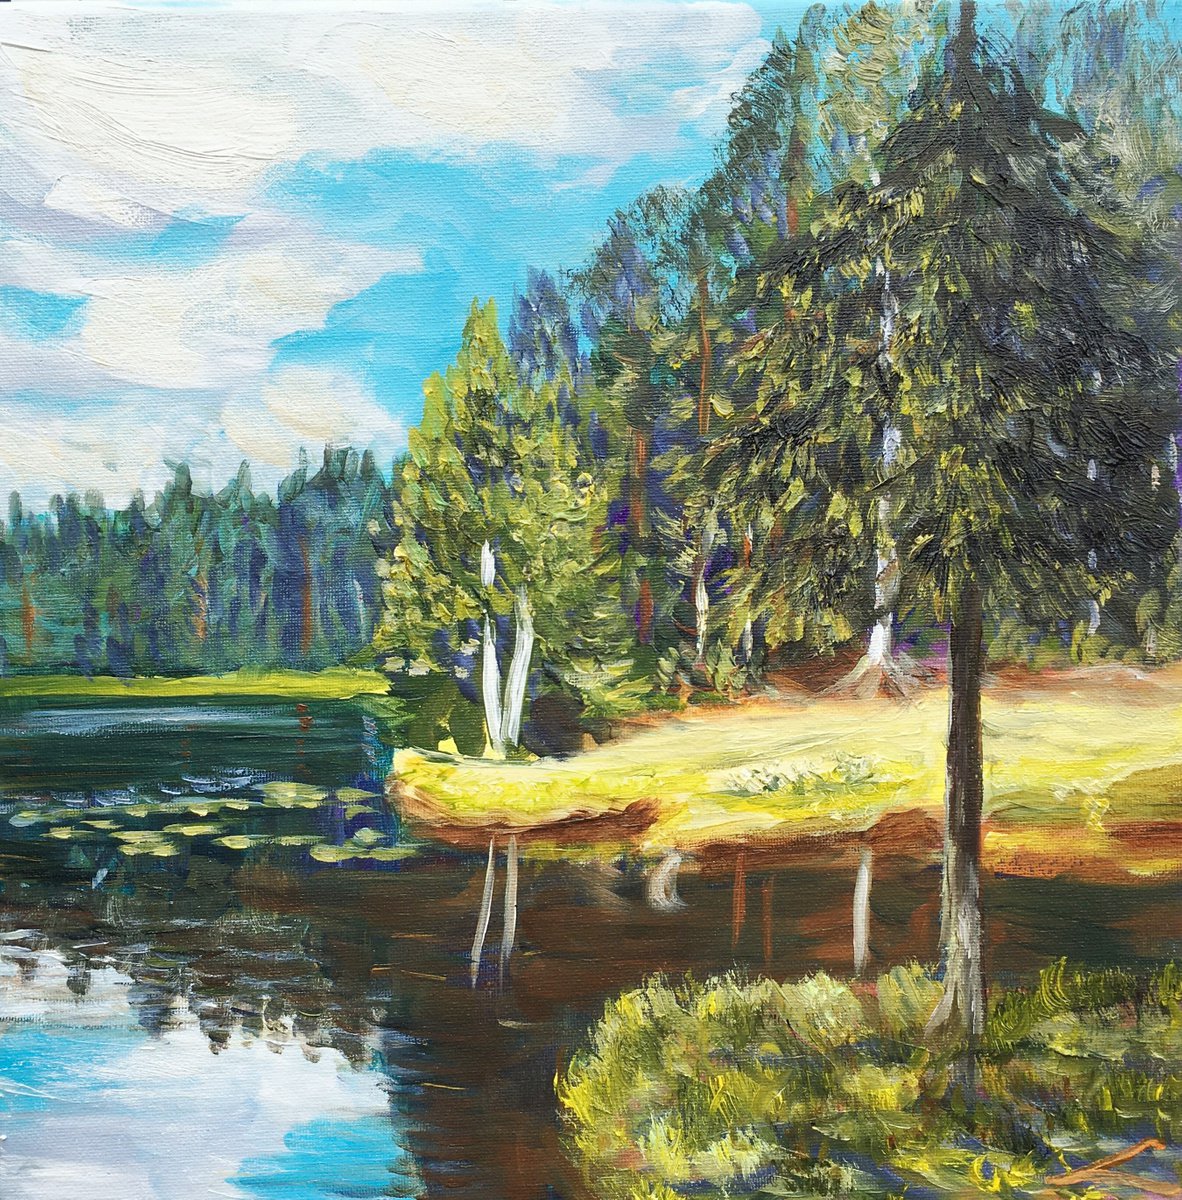 Forest lake 2 by Elena Sokolova